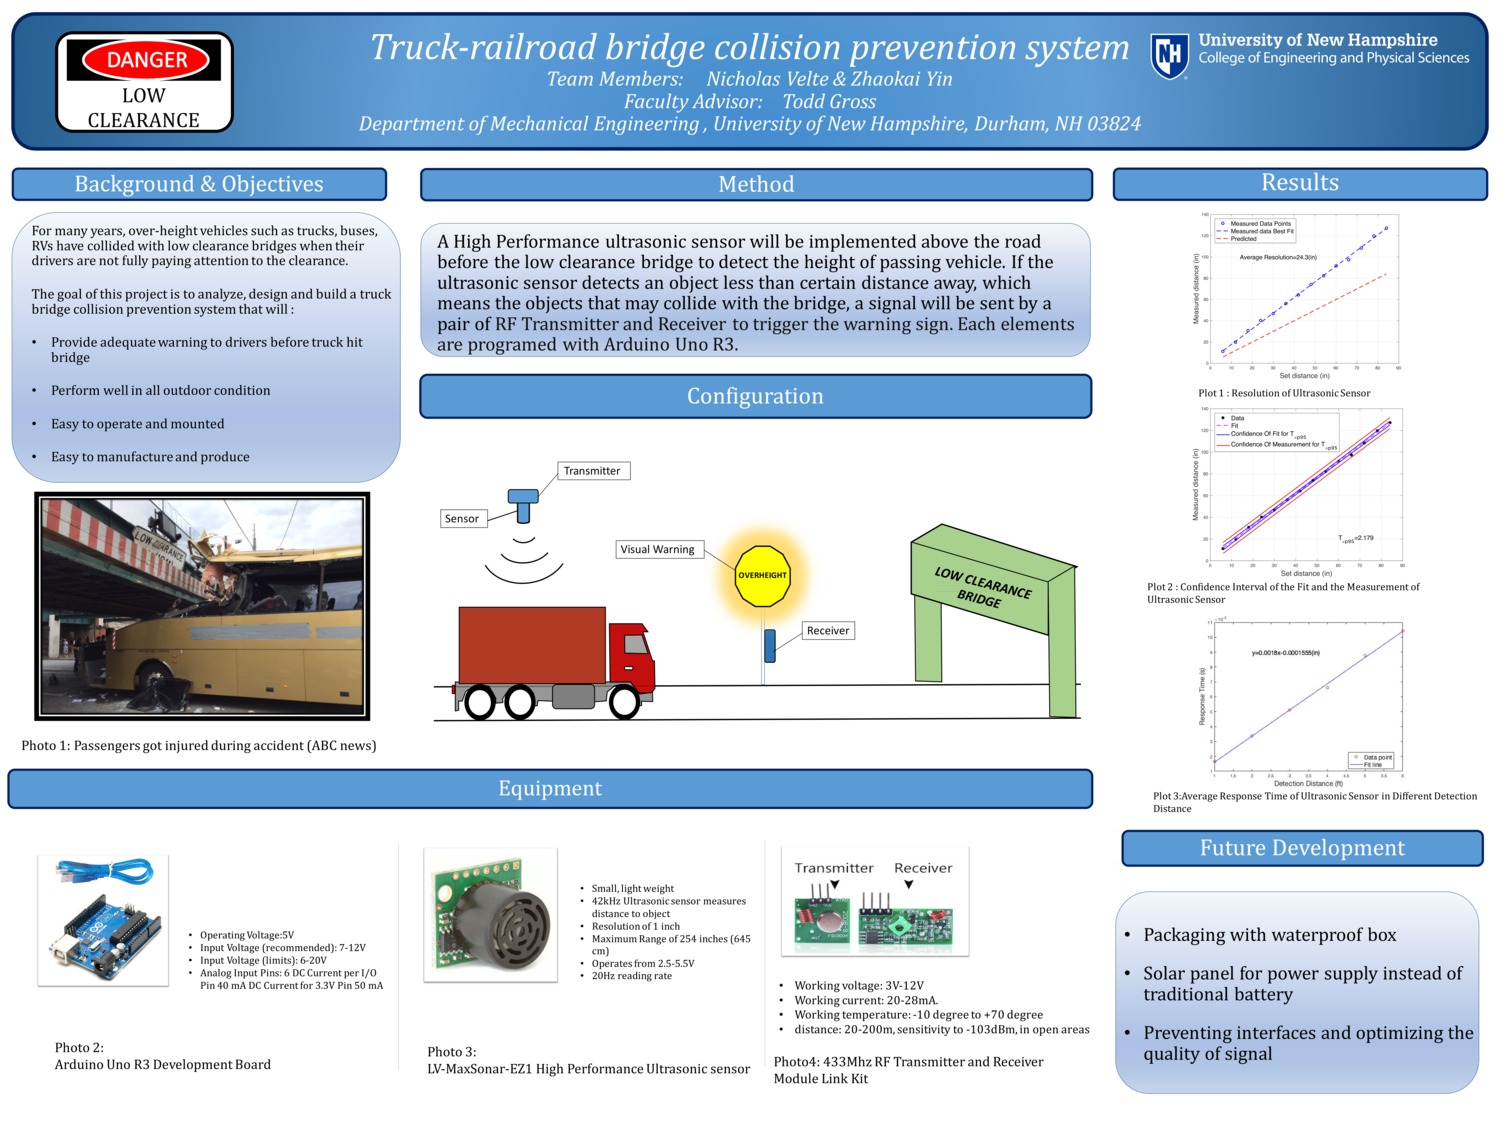 Truck-Railroad Bridge Collision Prevention System by zy2002